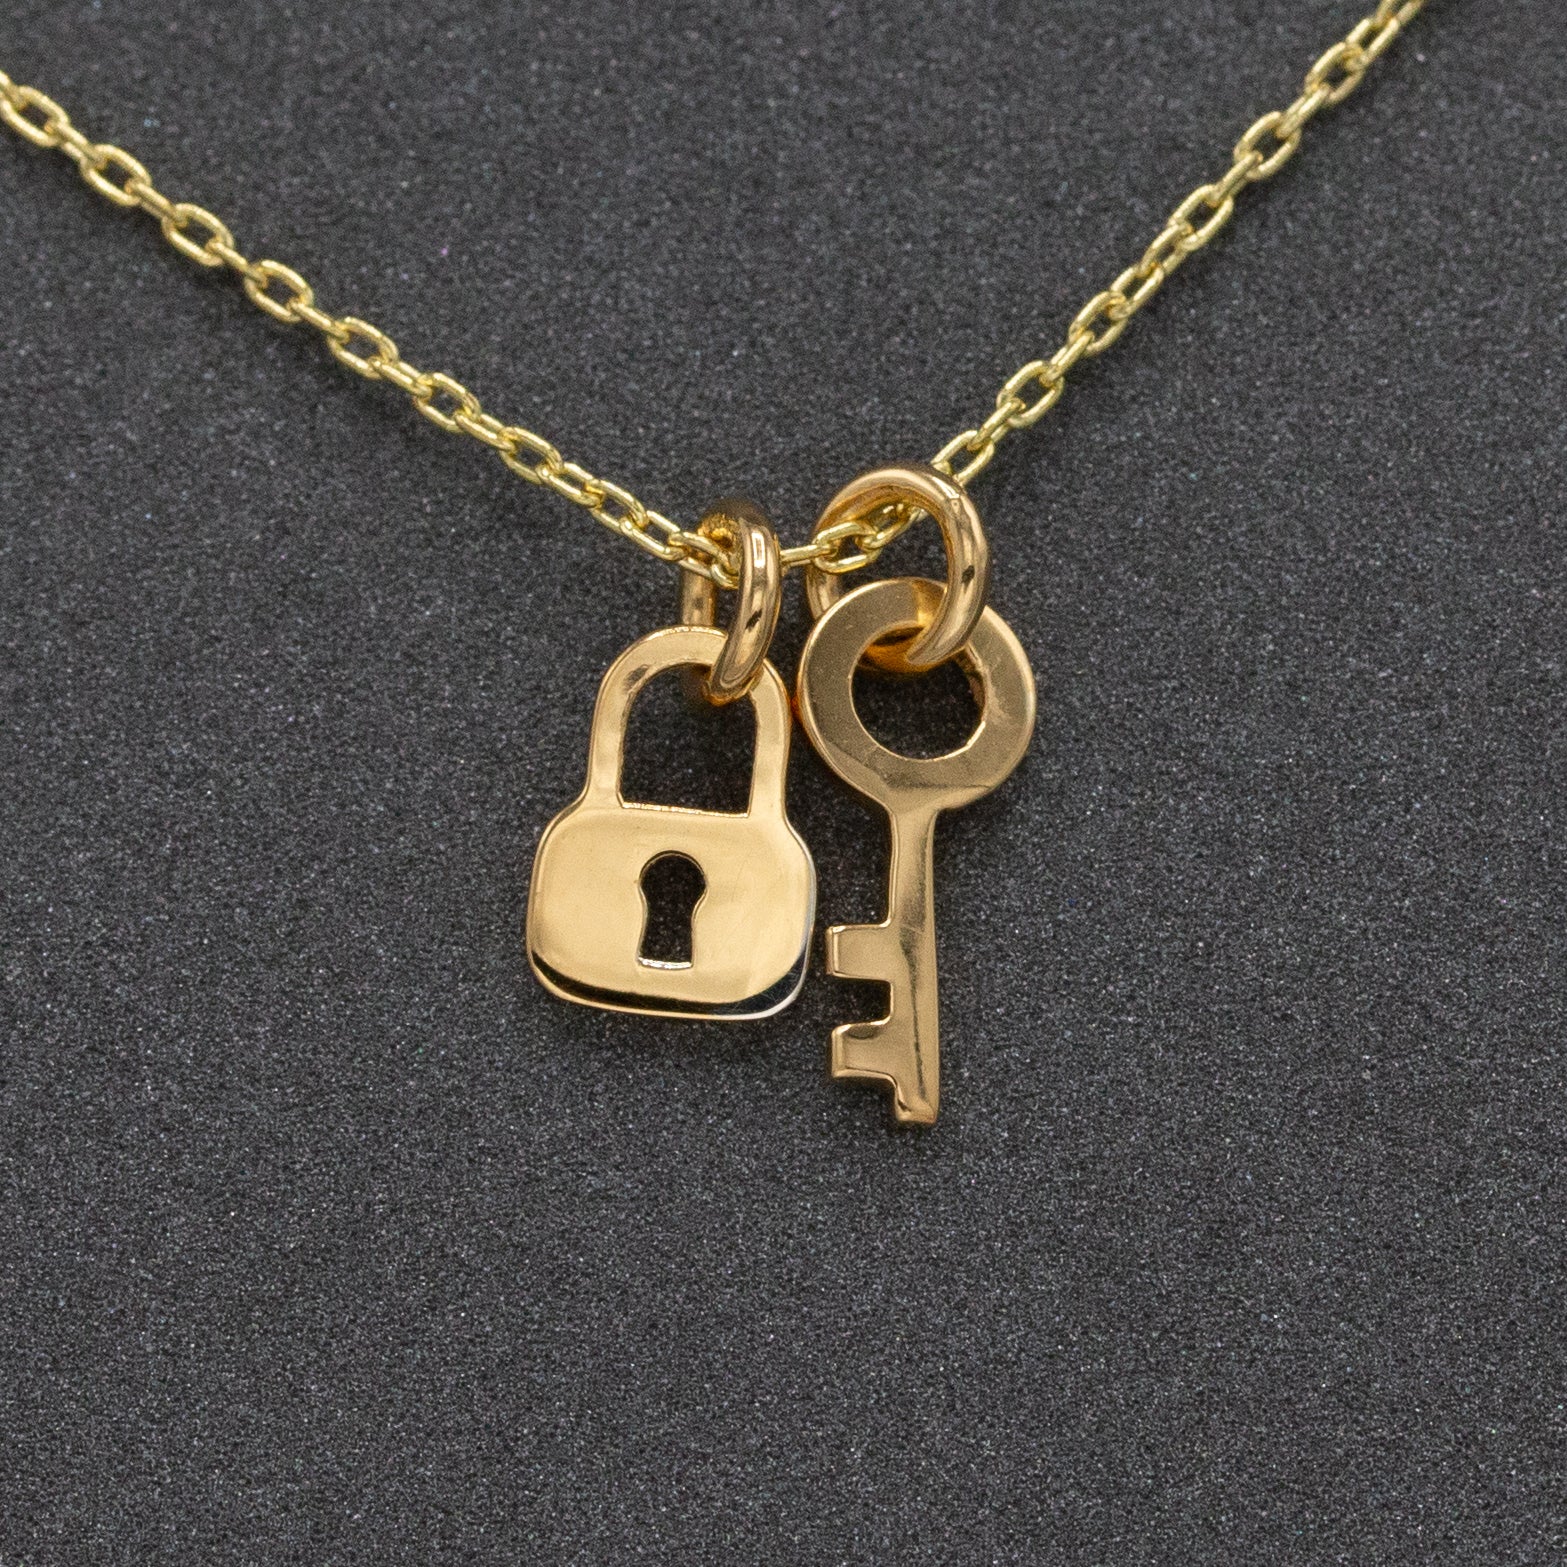 Dainty Lock and Key Necklace Silhouette – Plus1JewelsNYC